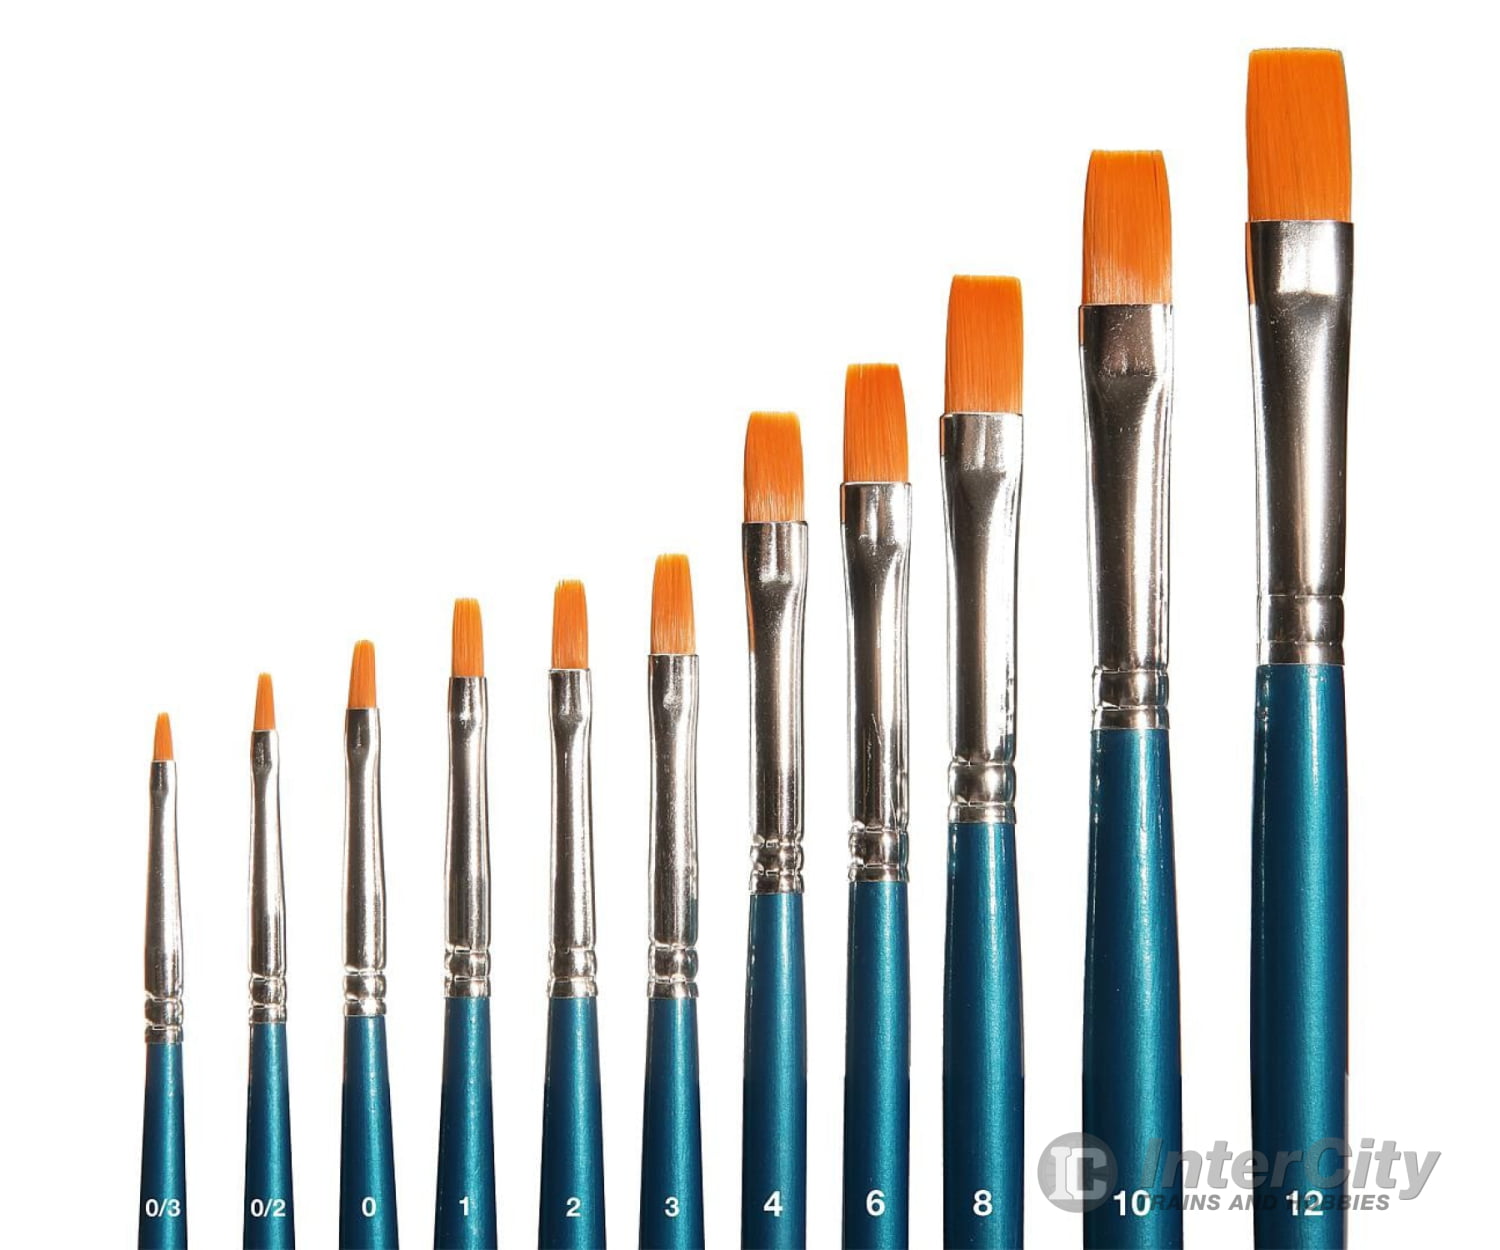 Faller 172125 Ho Tt N Z Flat Brush Synthetic Size 3 Tools